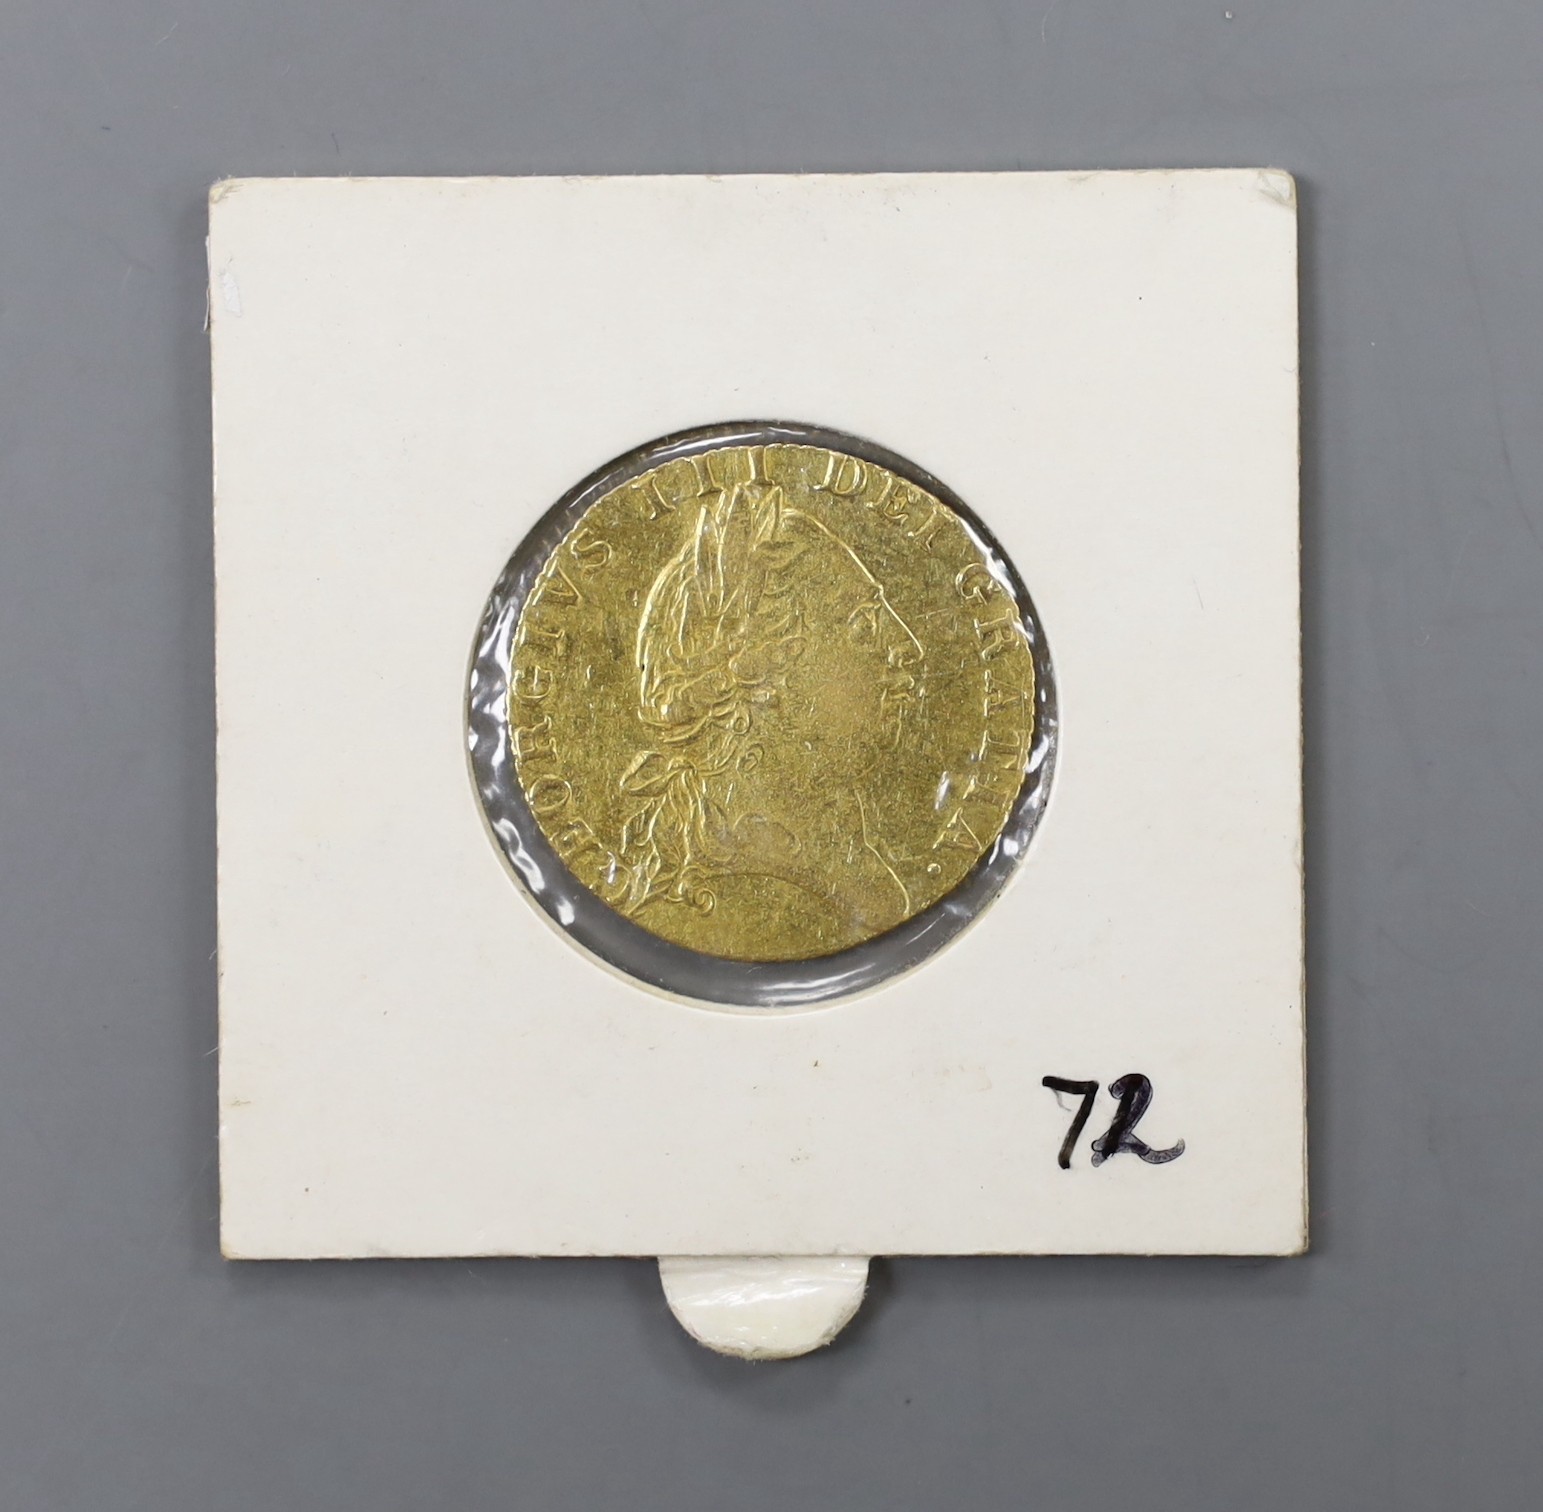 A George III gold spade guinea 1788, NVF